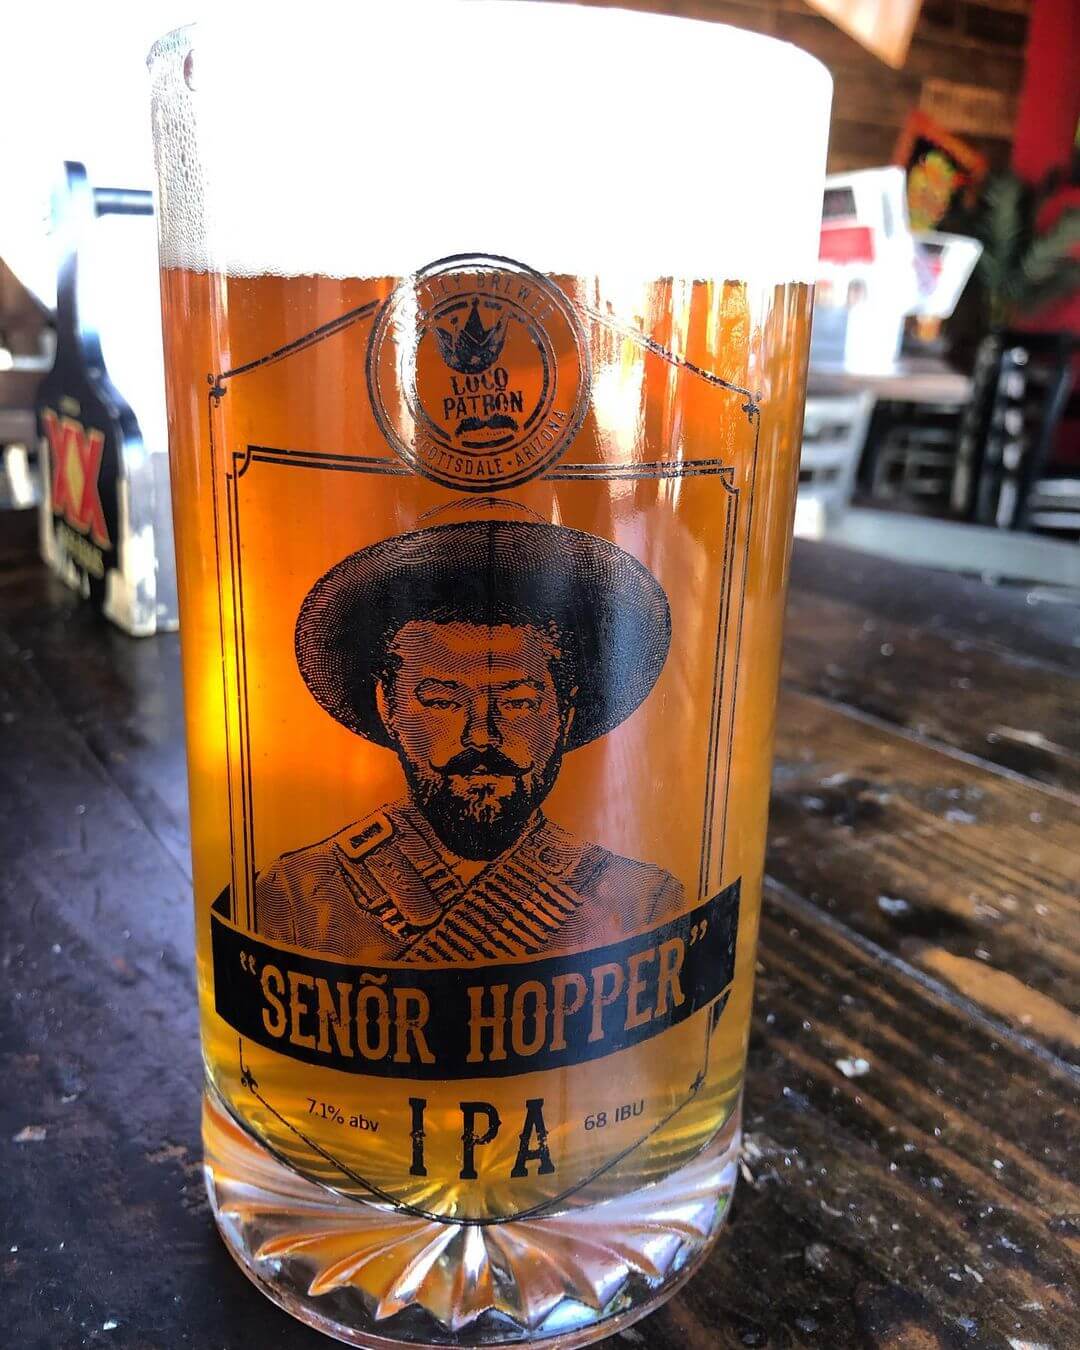 Señor Hopper IPA local brew